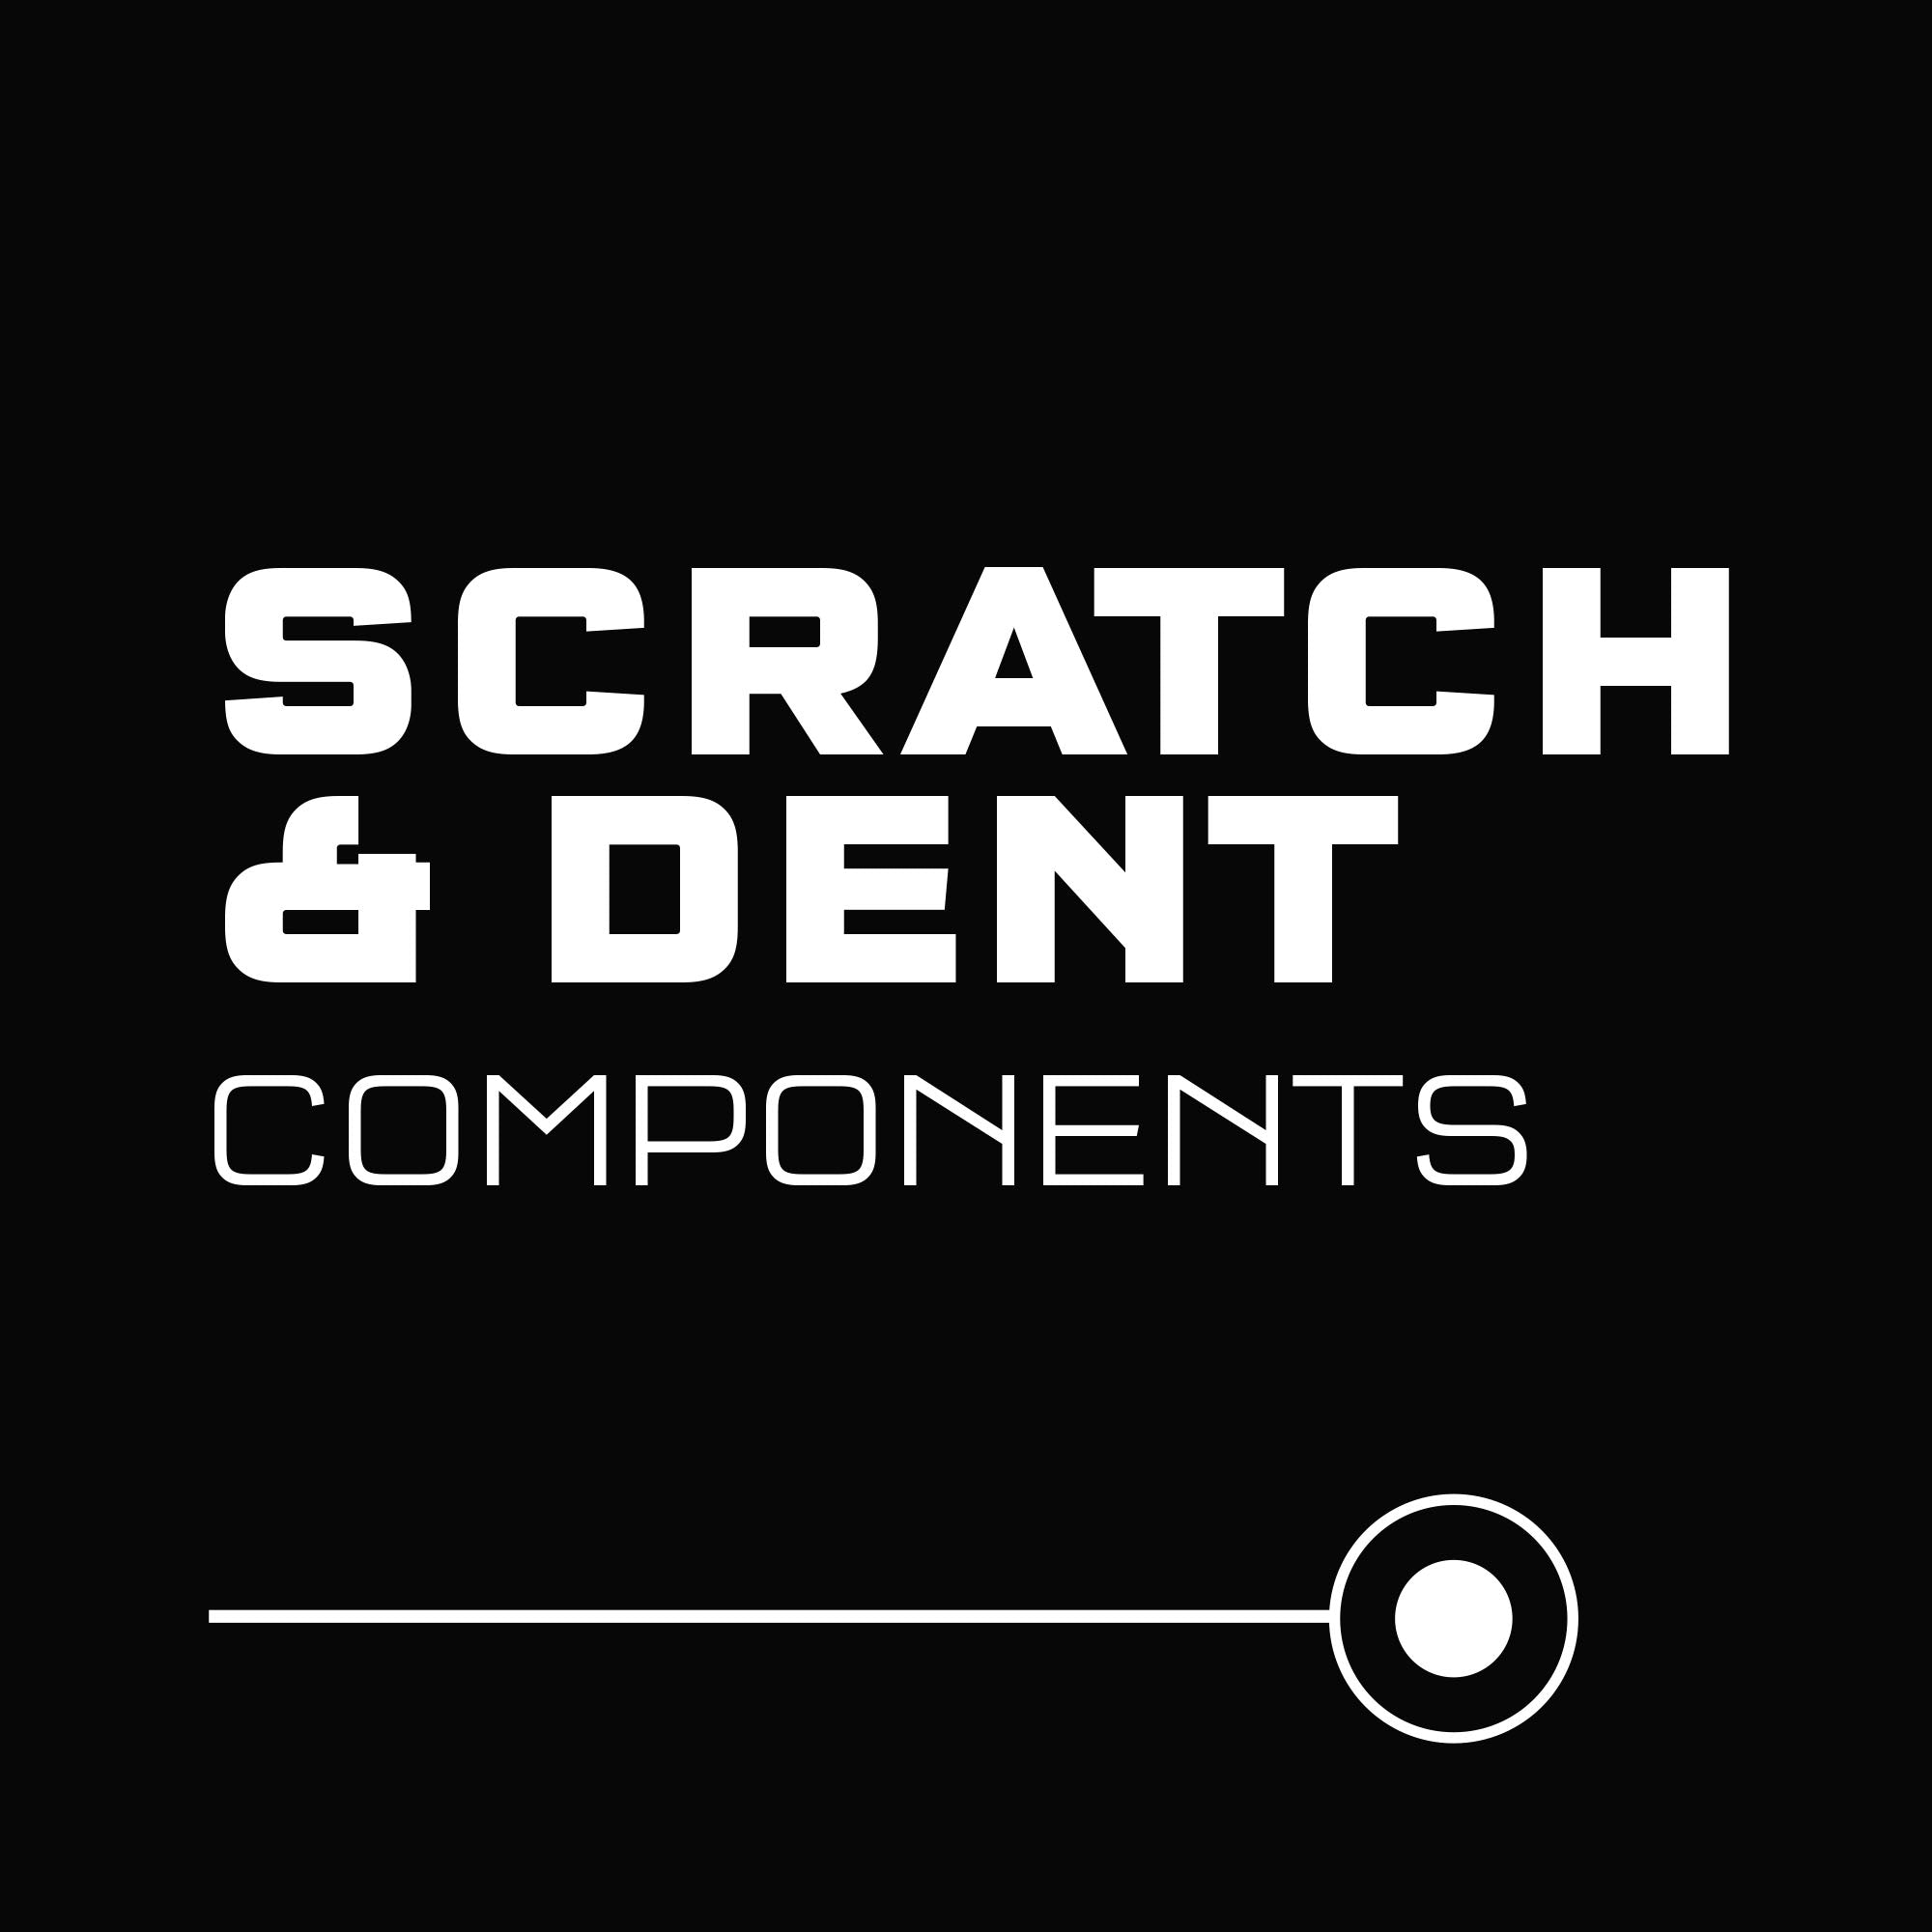 SCRATCH & DENT COMPONENTS